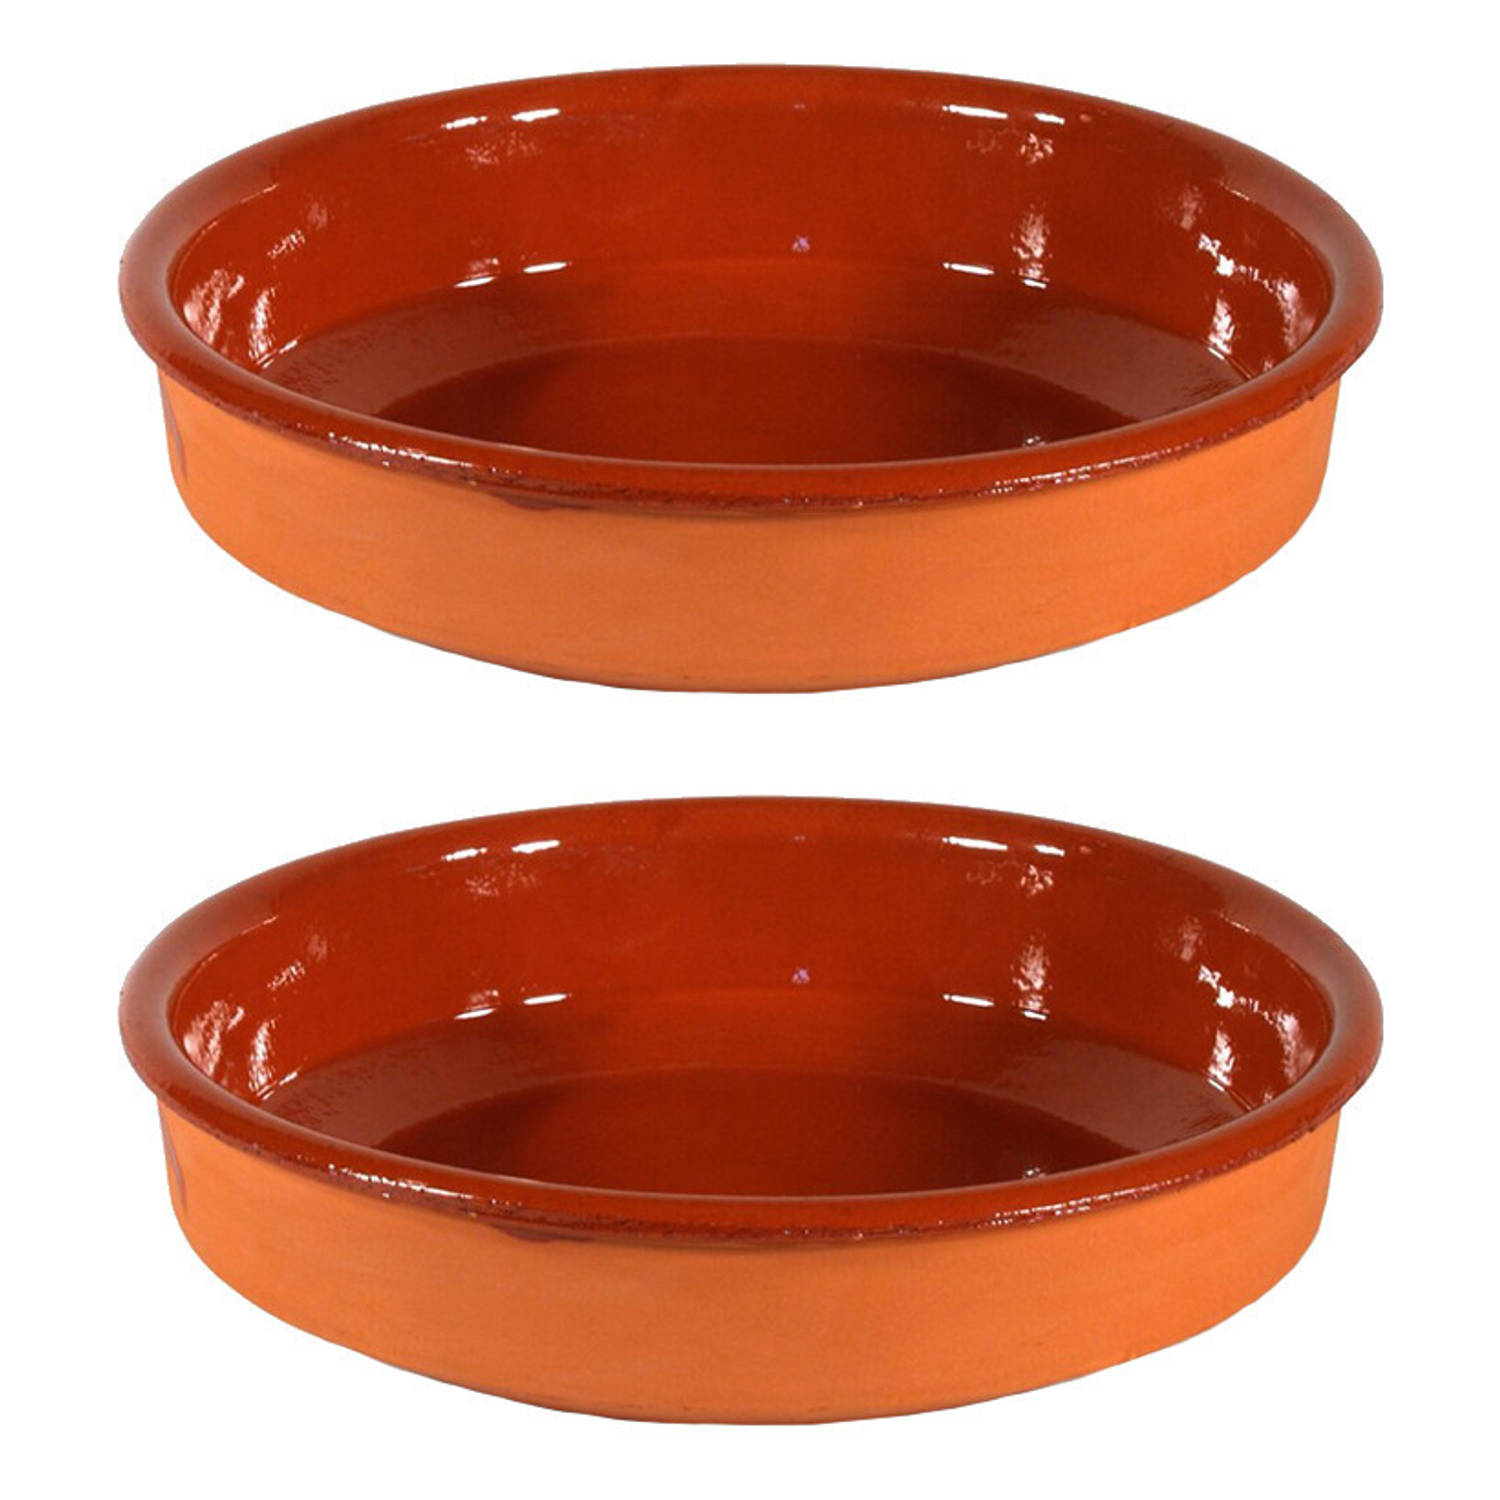 2x Terracotta tapas borden/schalen 24 cm - Snack en tapasschalen